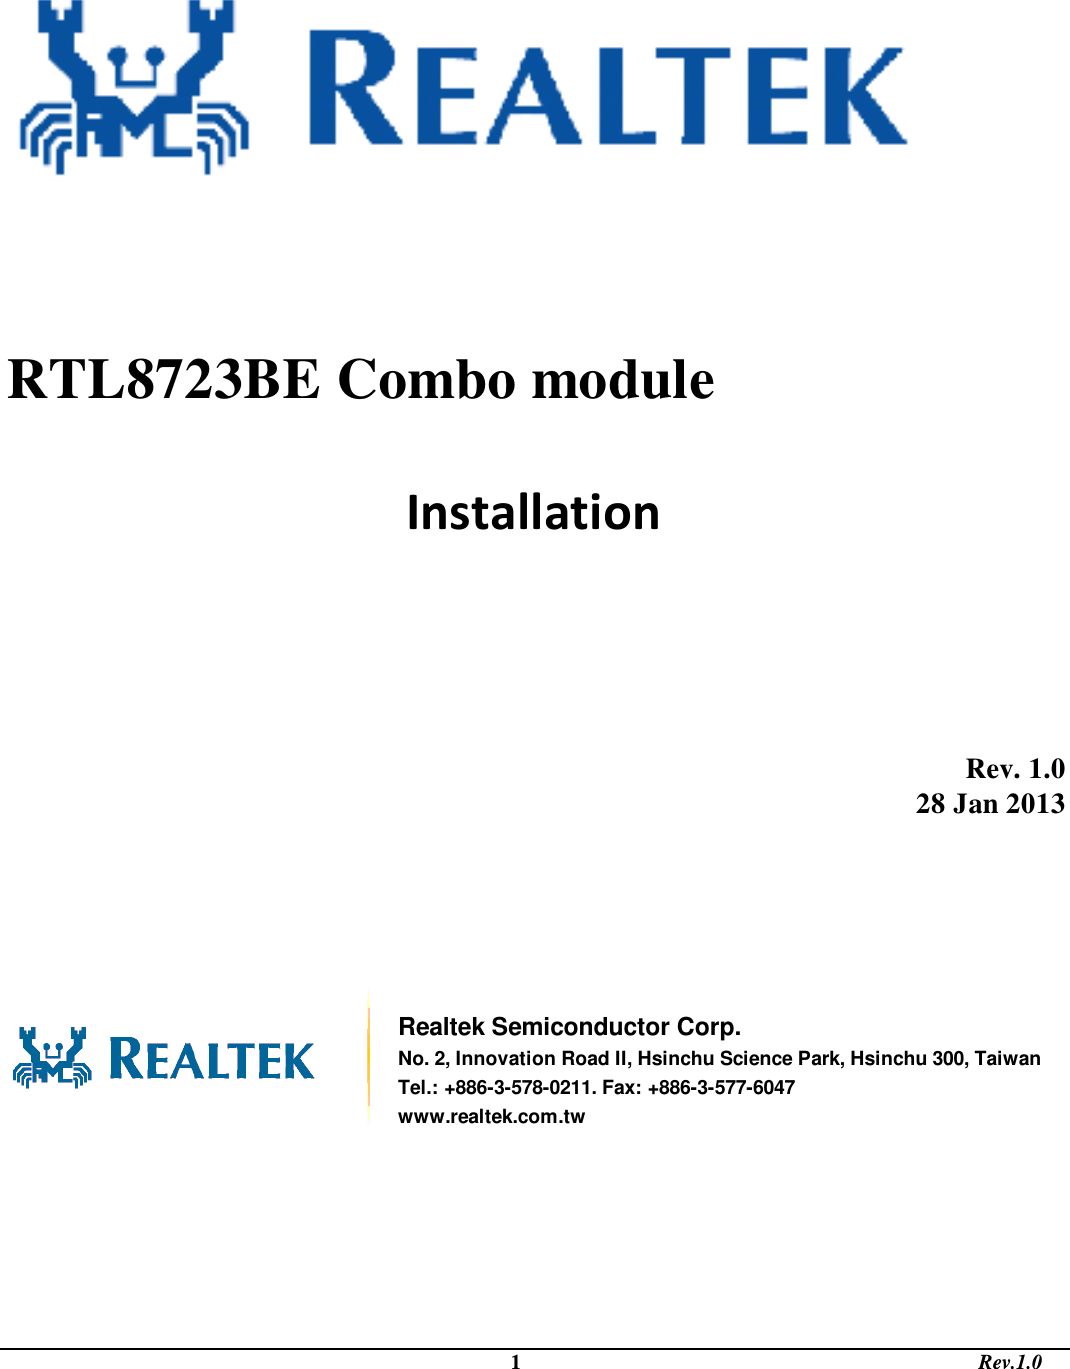                                                                                             1                                                                                       Rev.1.0            Installation          Rev. 1.0 28 Jan 2013        Realtek Semiconductor Corp. No. 2, Innovation Road II, Hsinchu Science Park, Hsinchu 300, Taiwan Tel.: +886-3-578-0211. Fax: +886-3-577-6047 www.realtek.com.tw      RTL8723BE Combo module  